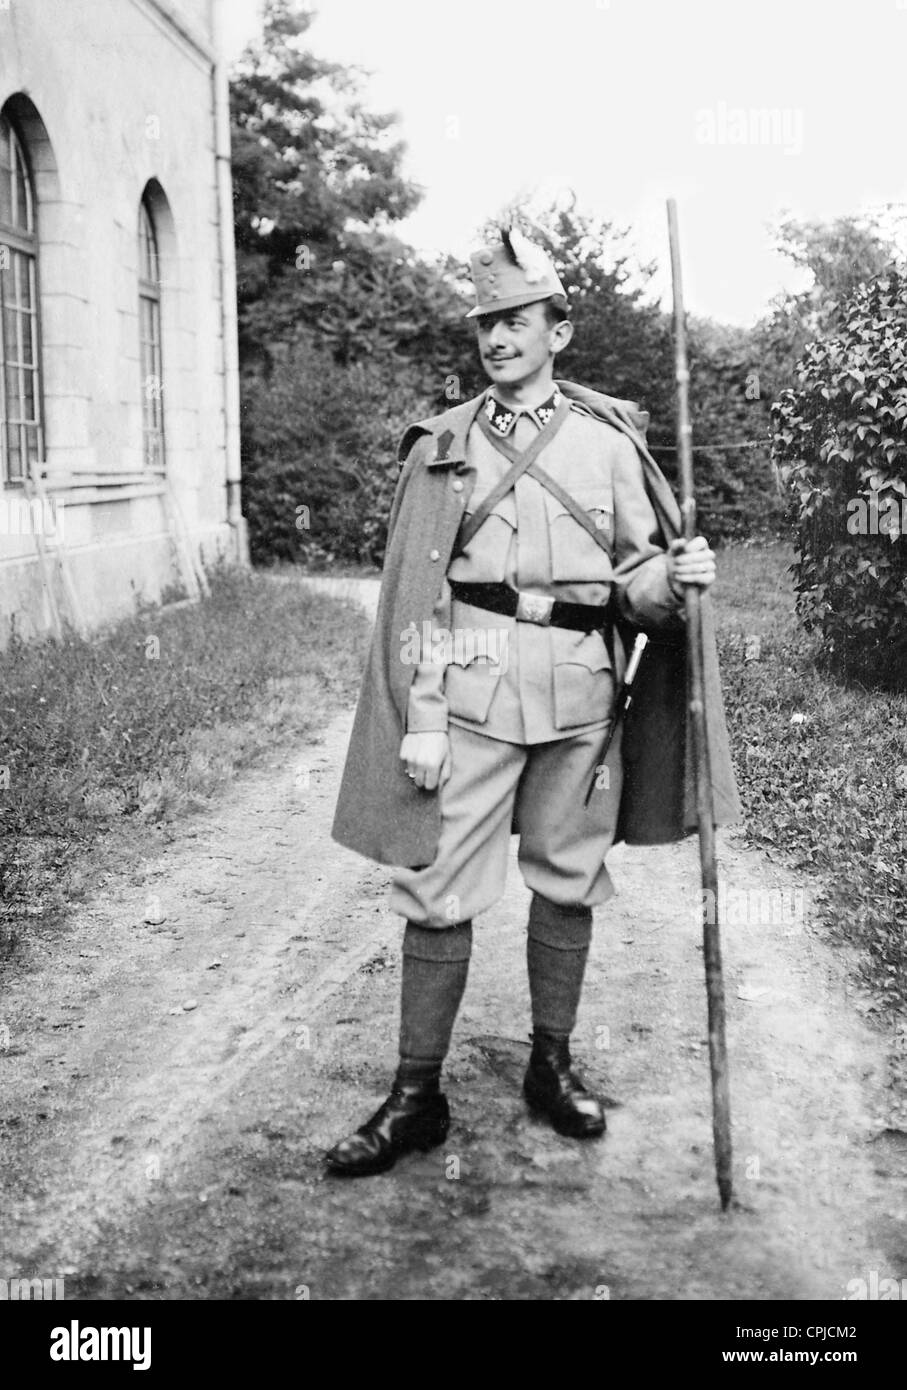 Austrian imperial light infantryman, 1907 Stock Photo